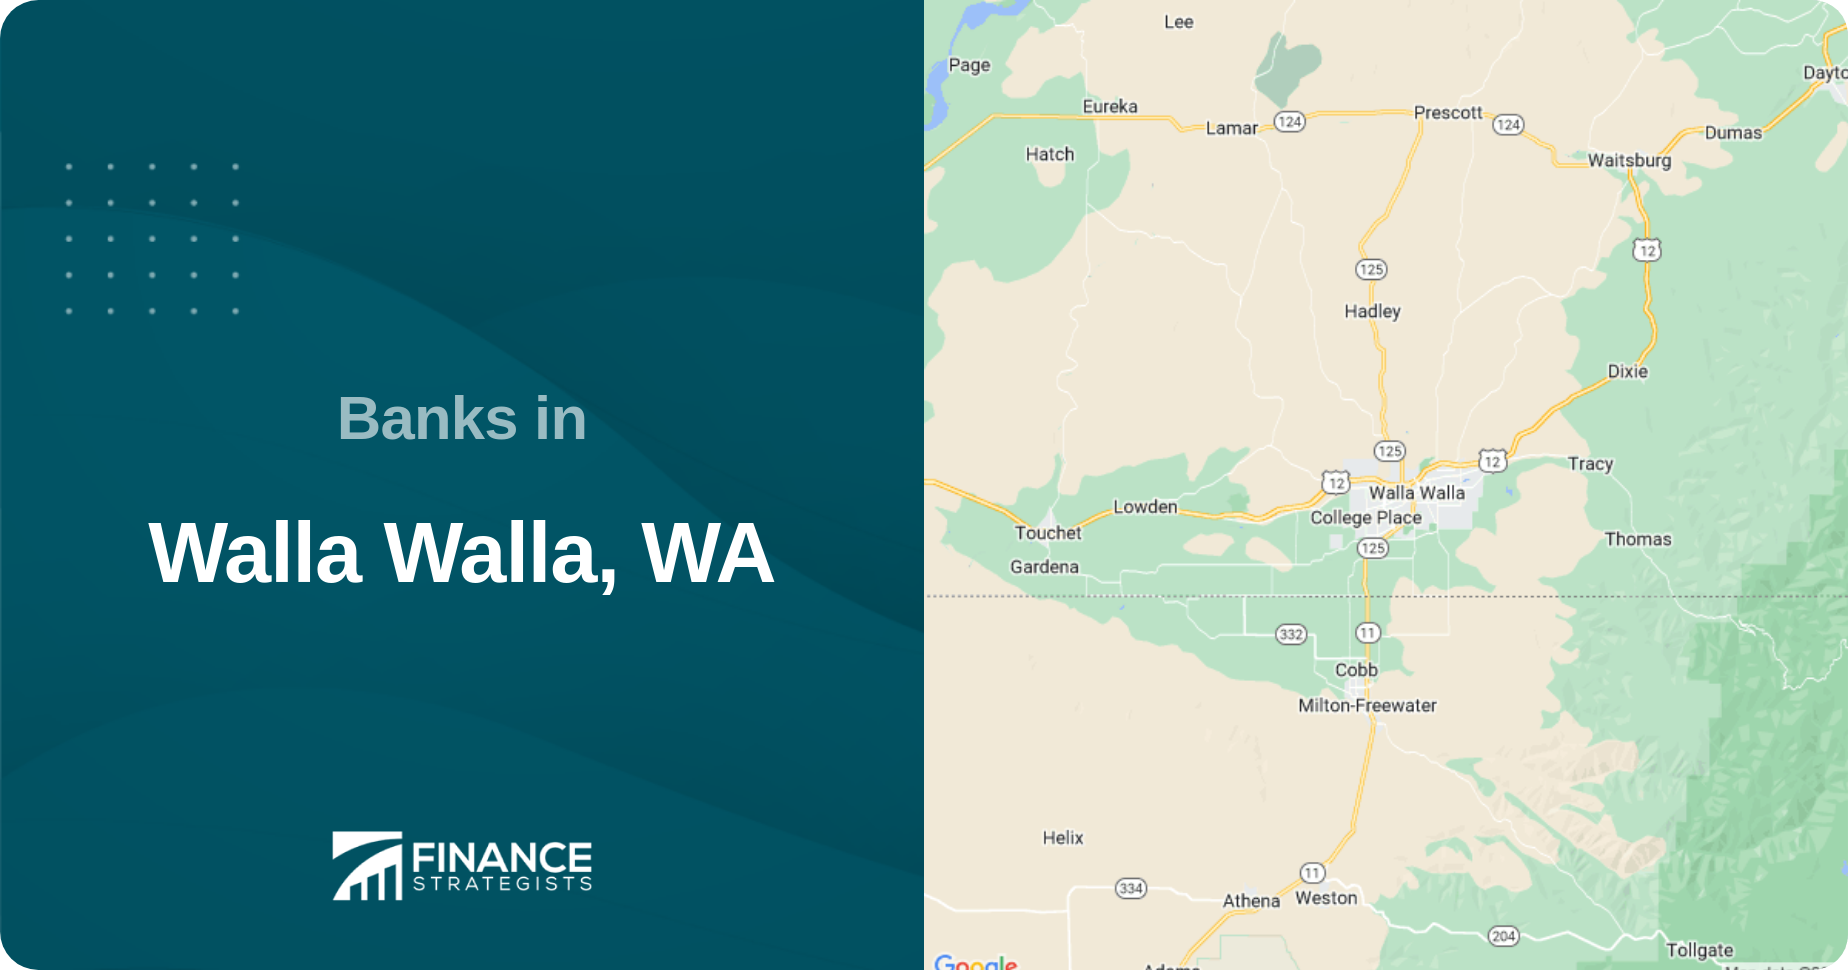 Banks in Walla Walla, WA